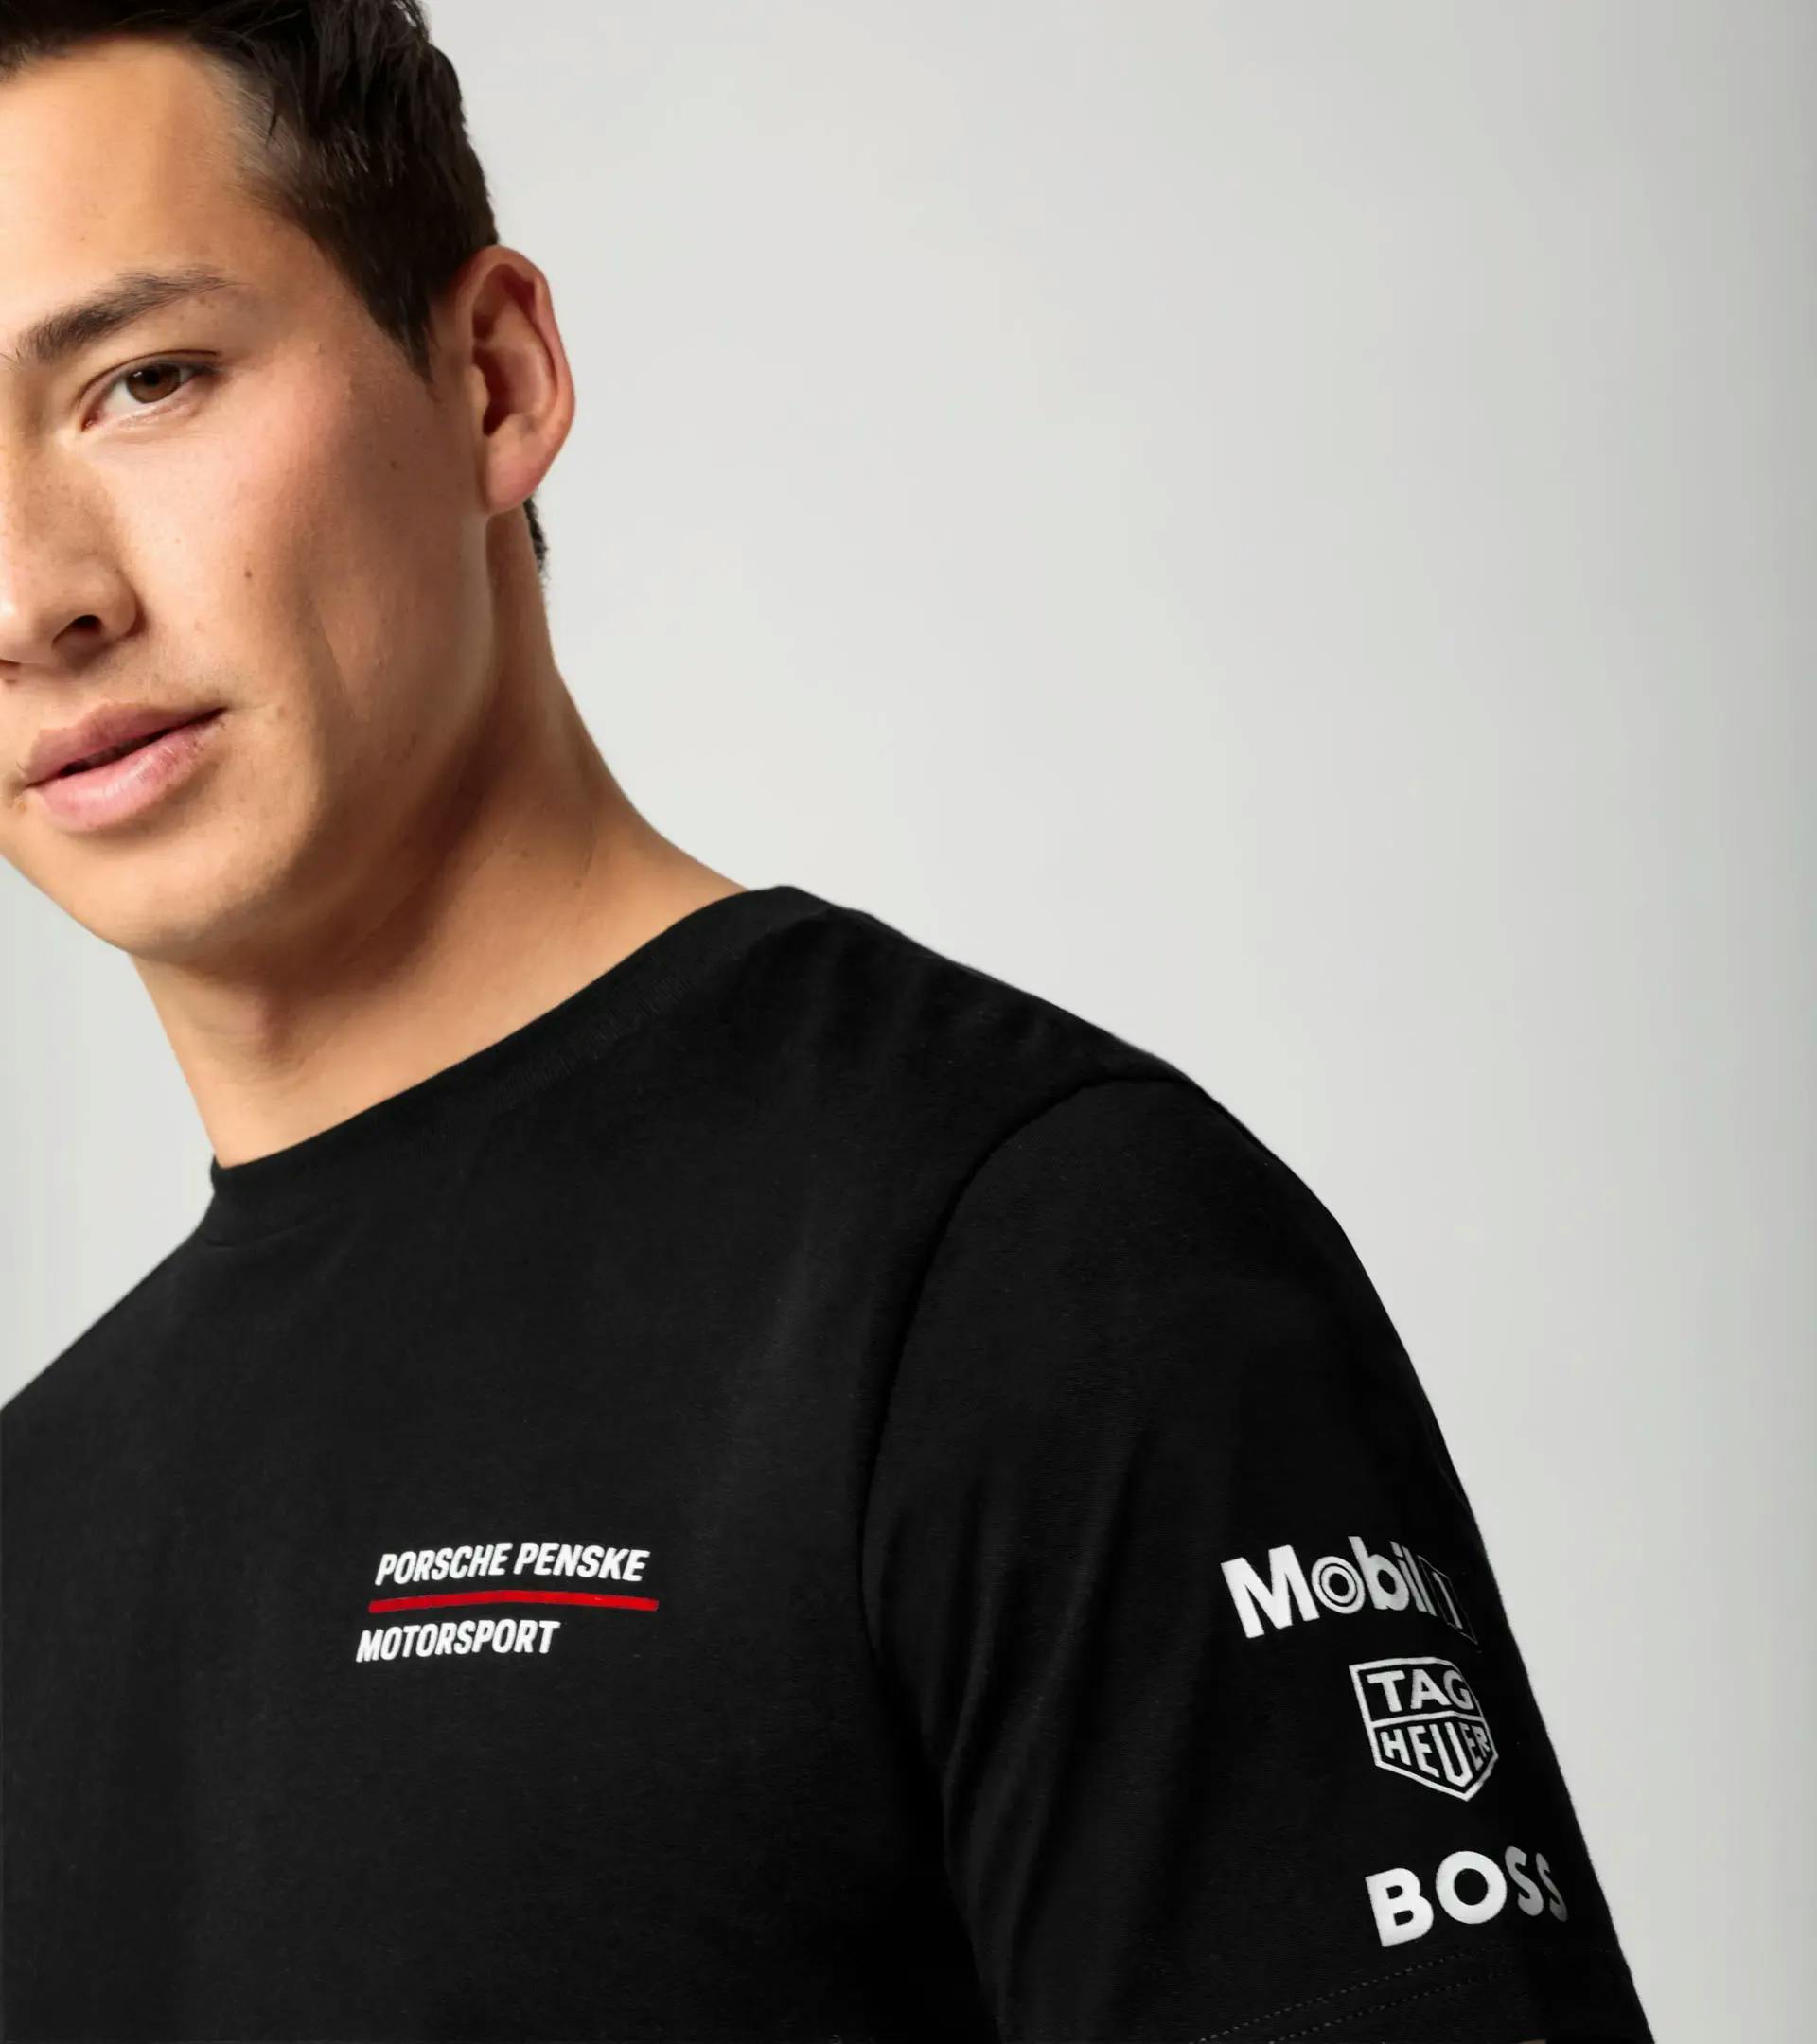 Unisex T-Shirt – Porsche Penske Motorsport 4